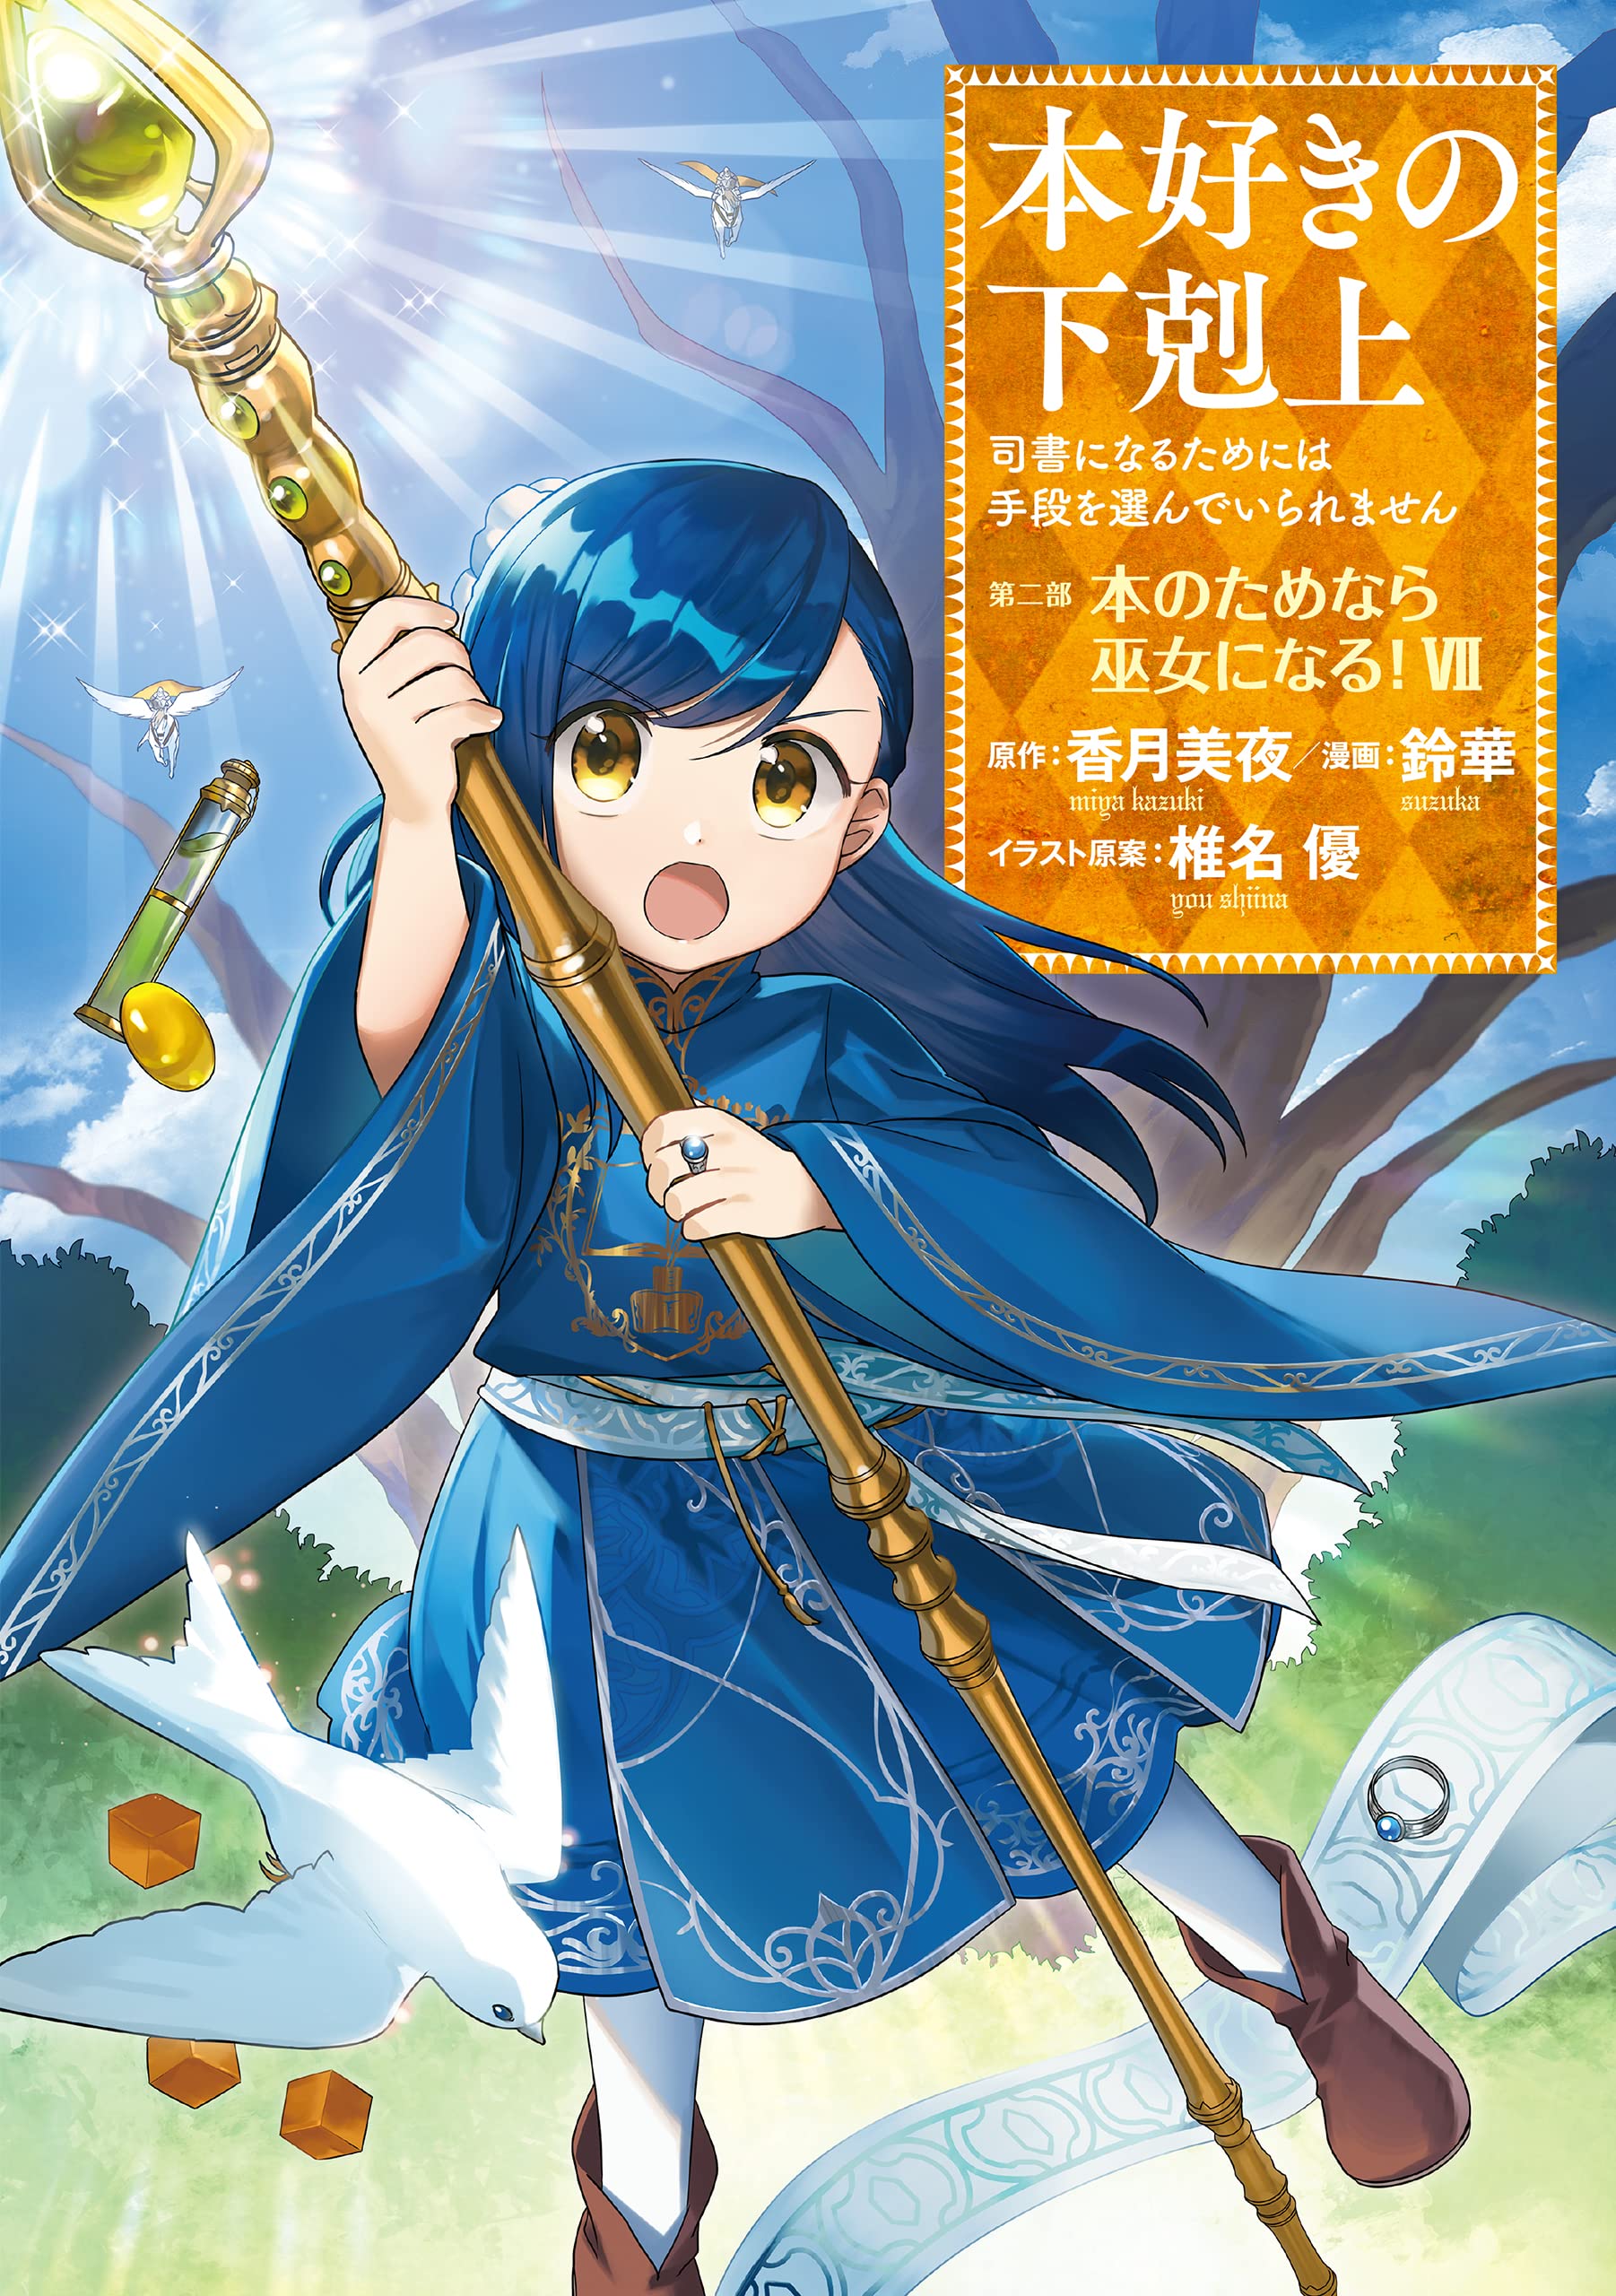 Manga Mogura RE on X: Light Novel Ascendance of a Bookworm by Miya  Kazuki, You Shiina has 9 million copies in circulation (including manga,  digital) (Honzuki no Gekokujou) English release @jnovelclub   /